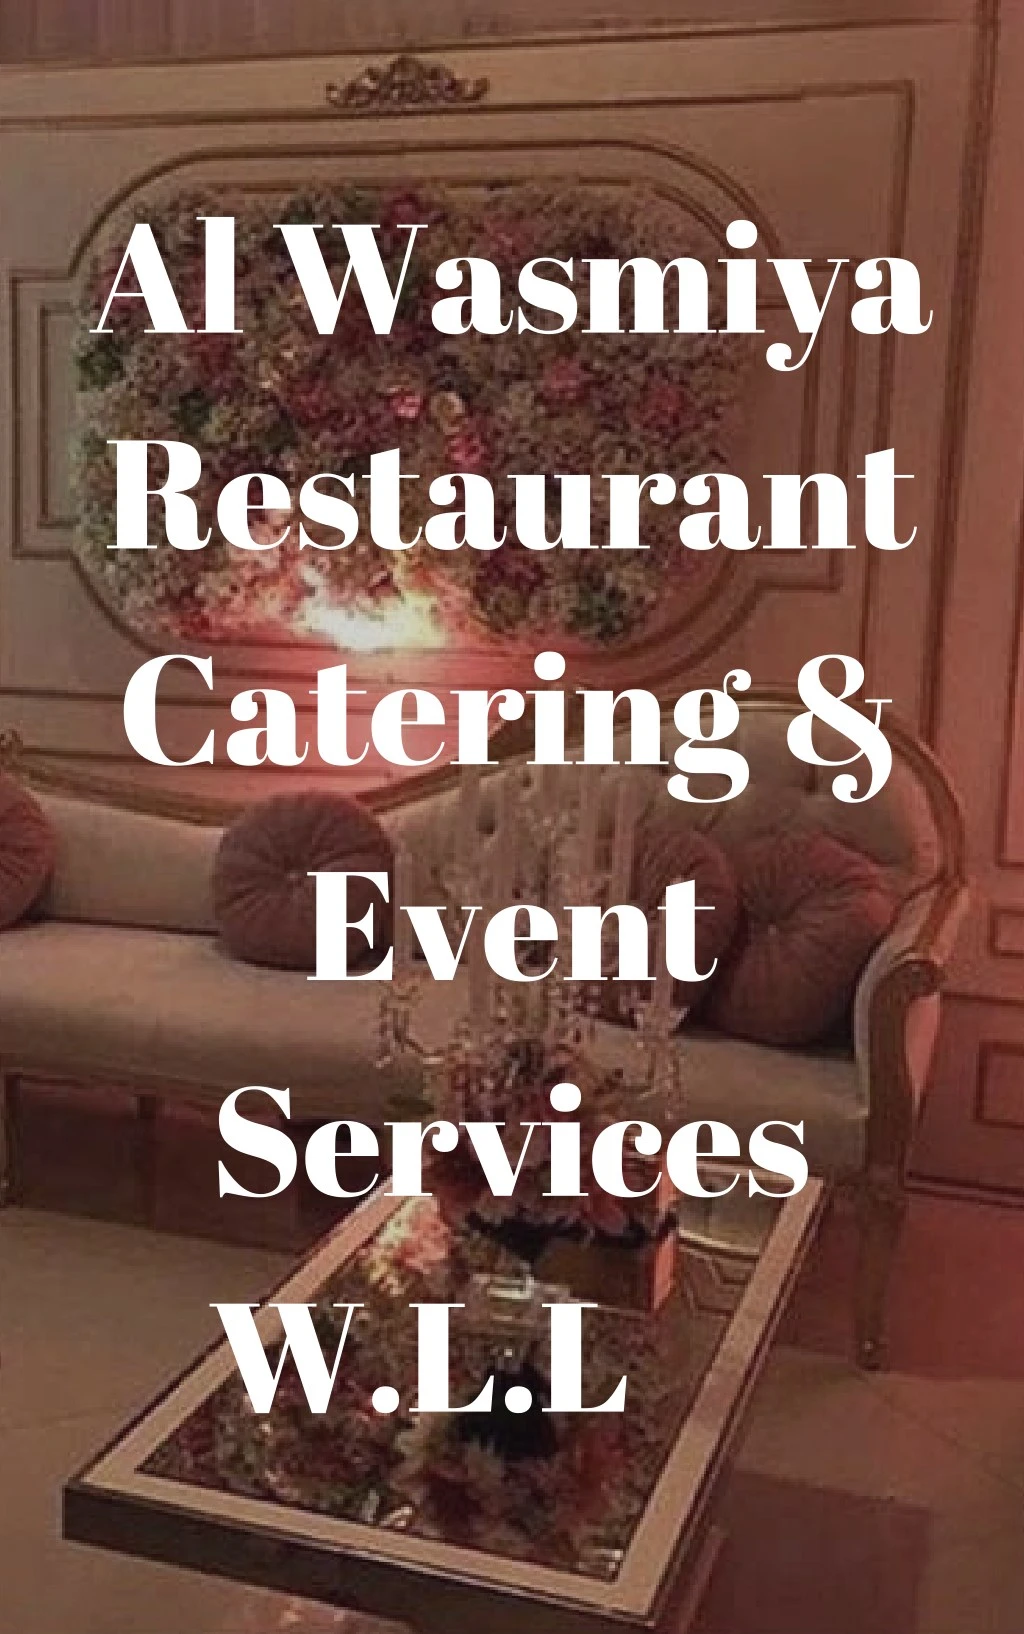 al wasmiya restaurant catering event services